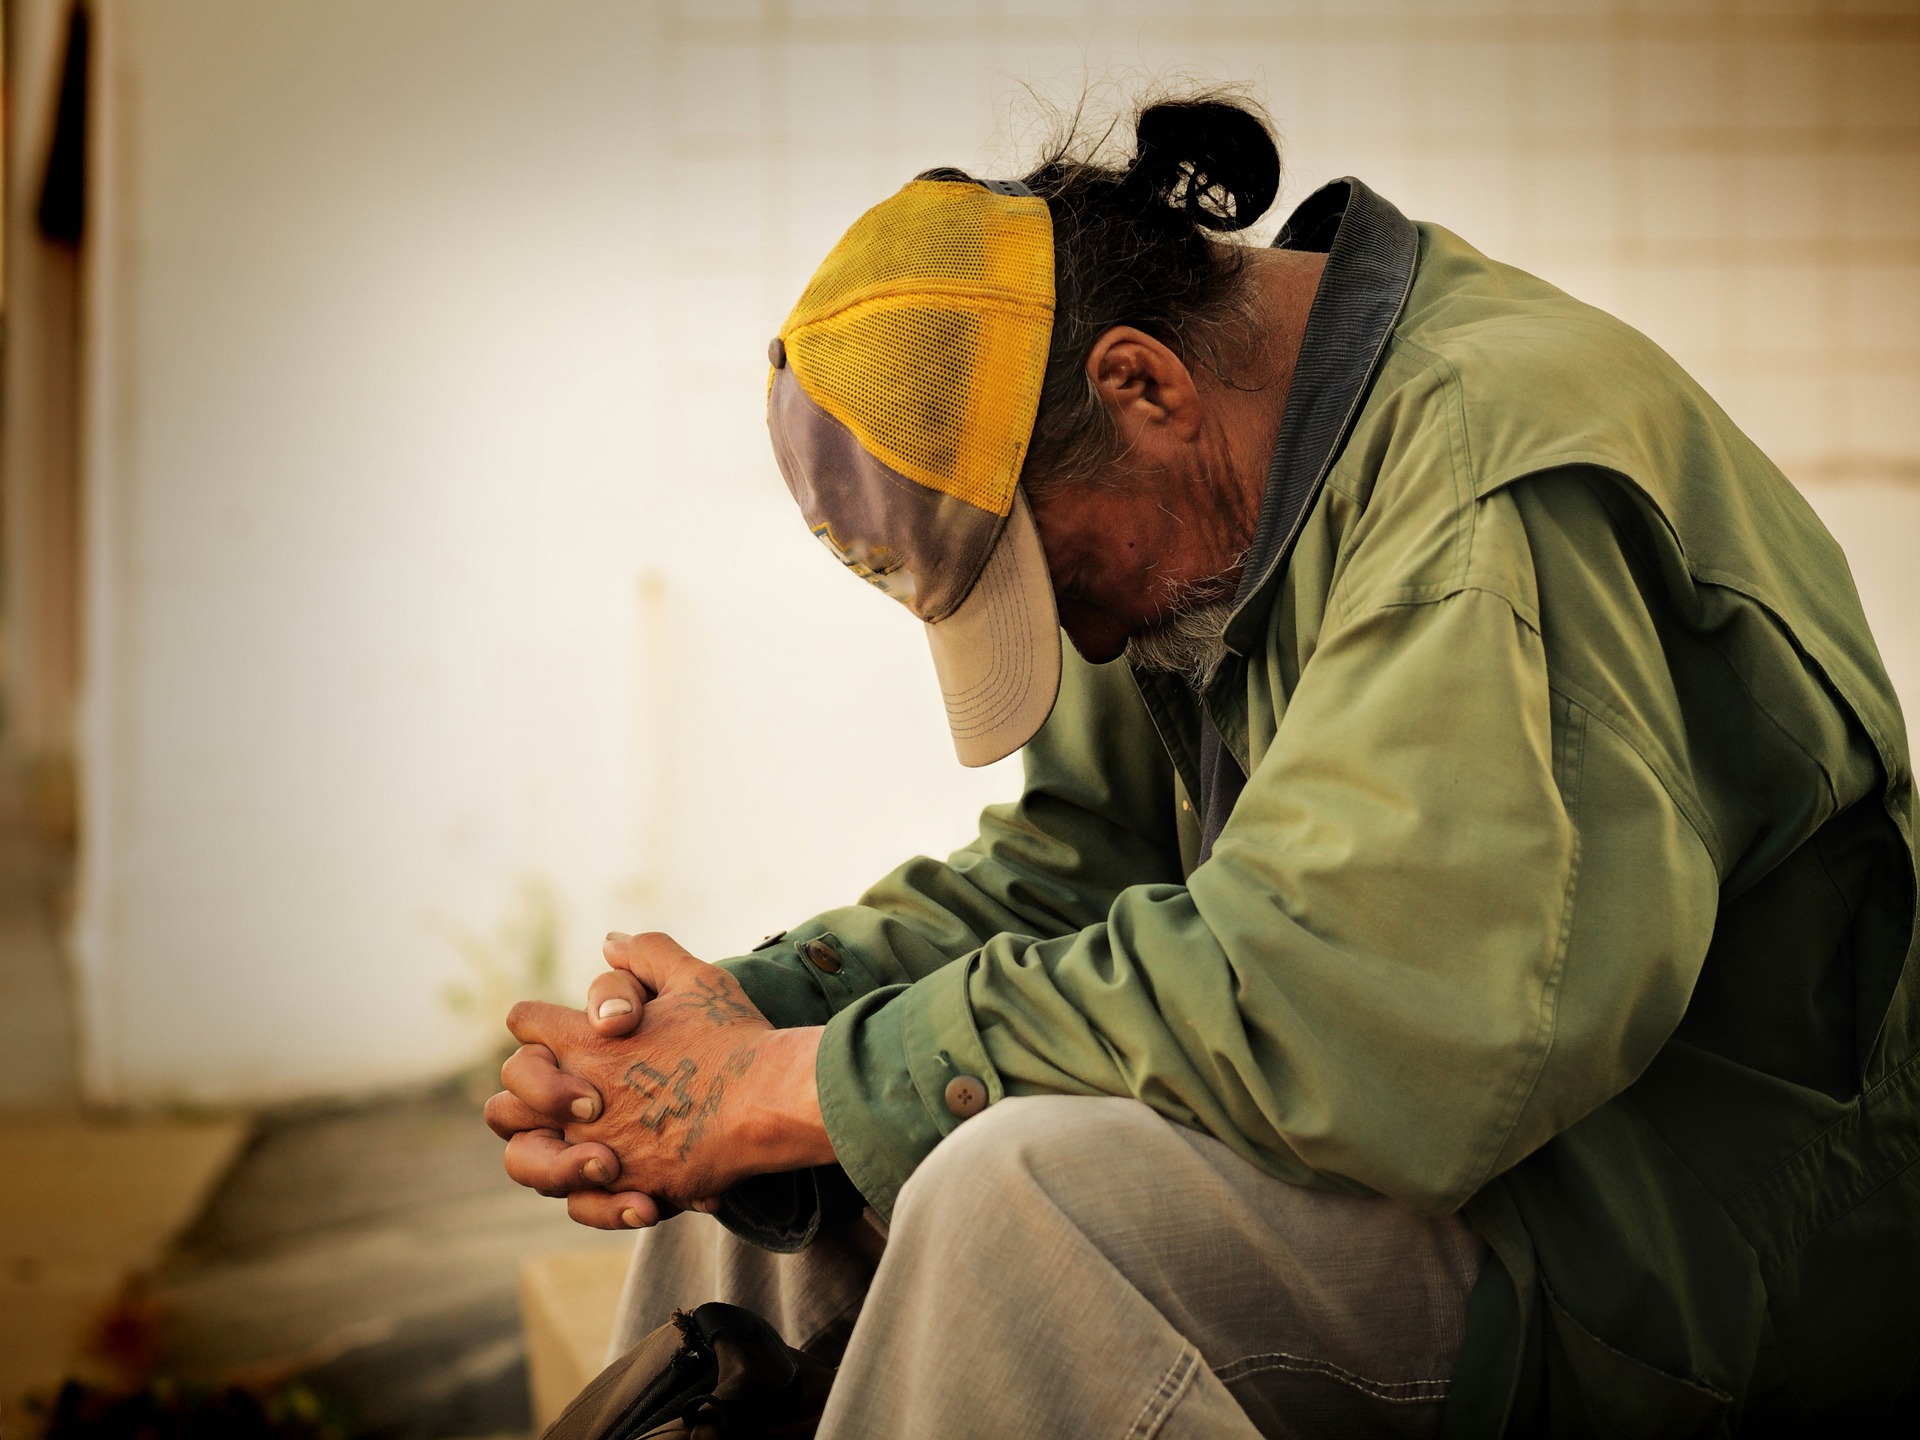 Opinion: Ending Homelessness Among the Elderly